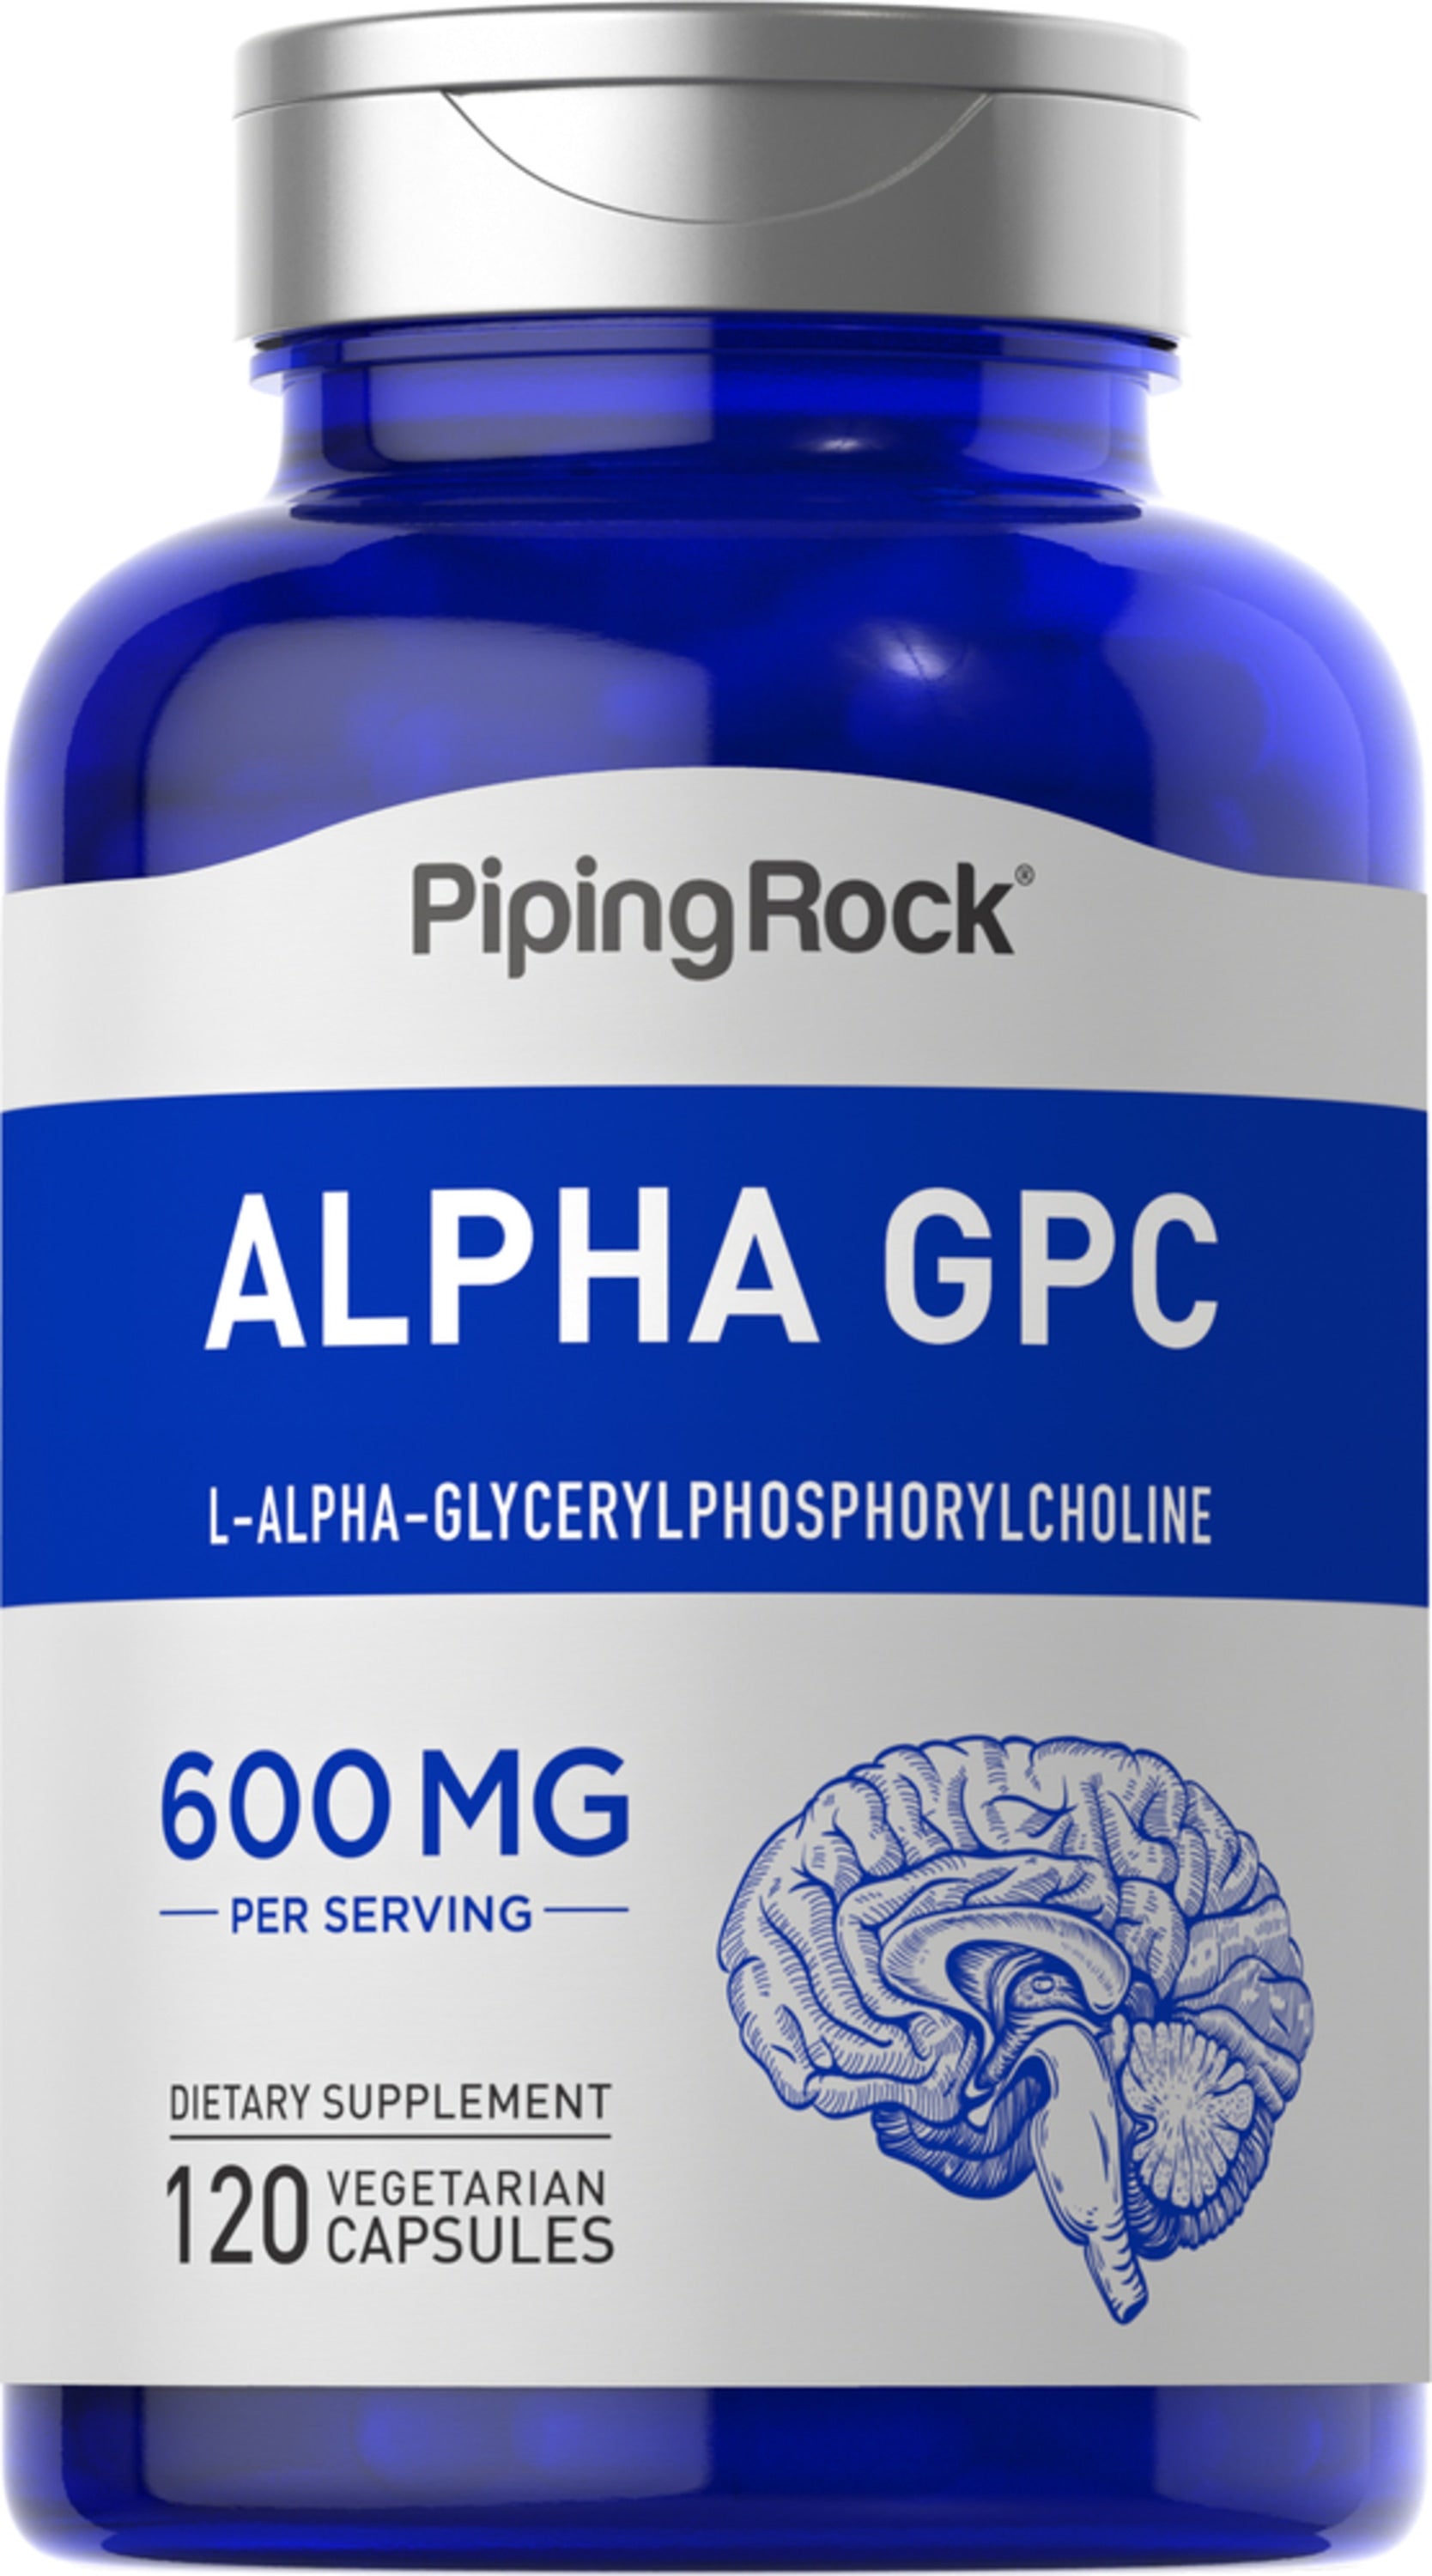 Alpha GPC Veggie Capsules – X Gold Health